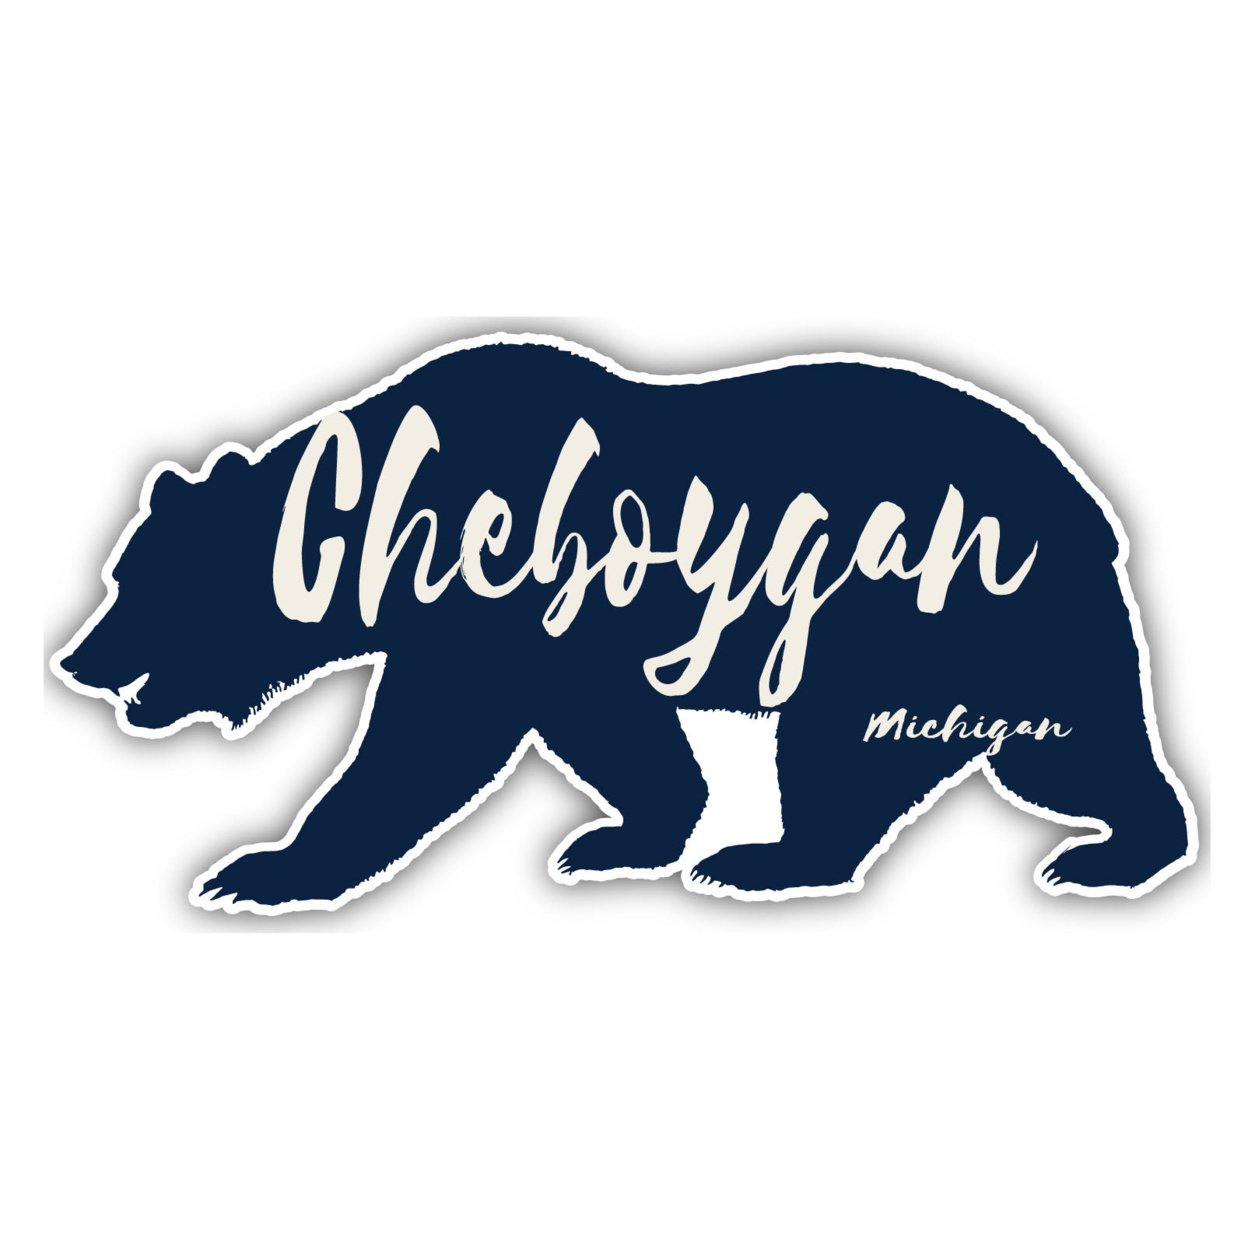 Cheboygan Michigan Souvenir Decorative Stickers (Choose Theme And Size) - Single Unit, 2-Inch, Great Outdoors